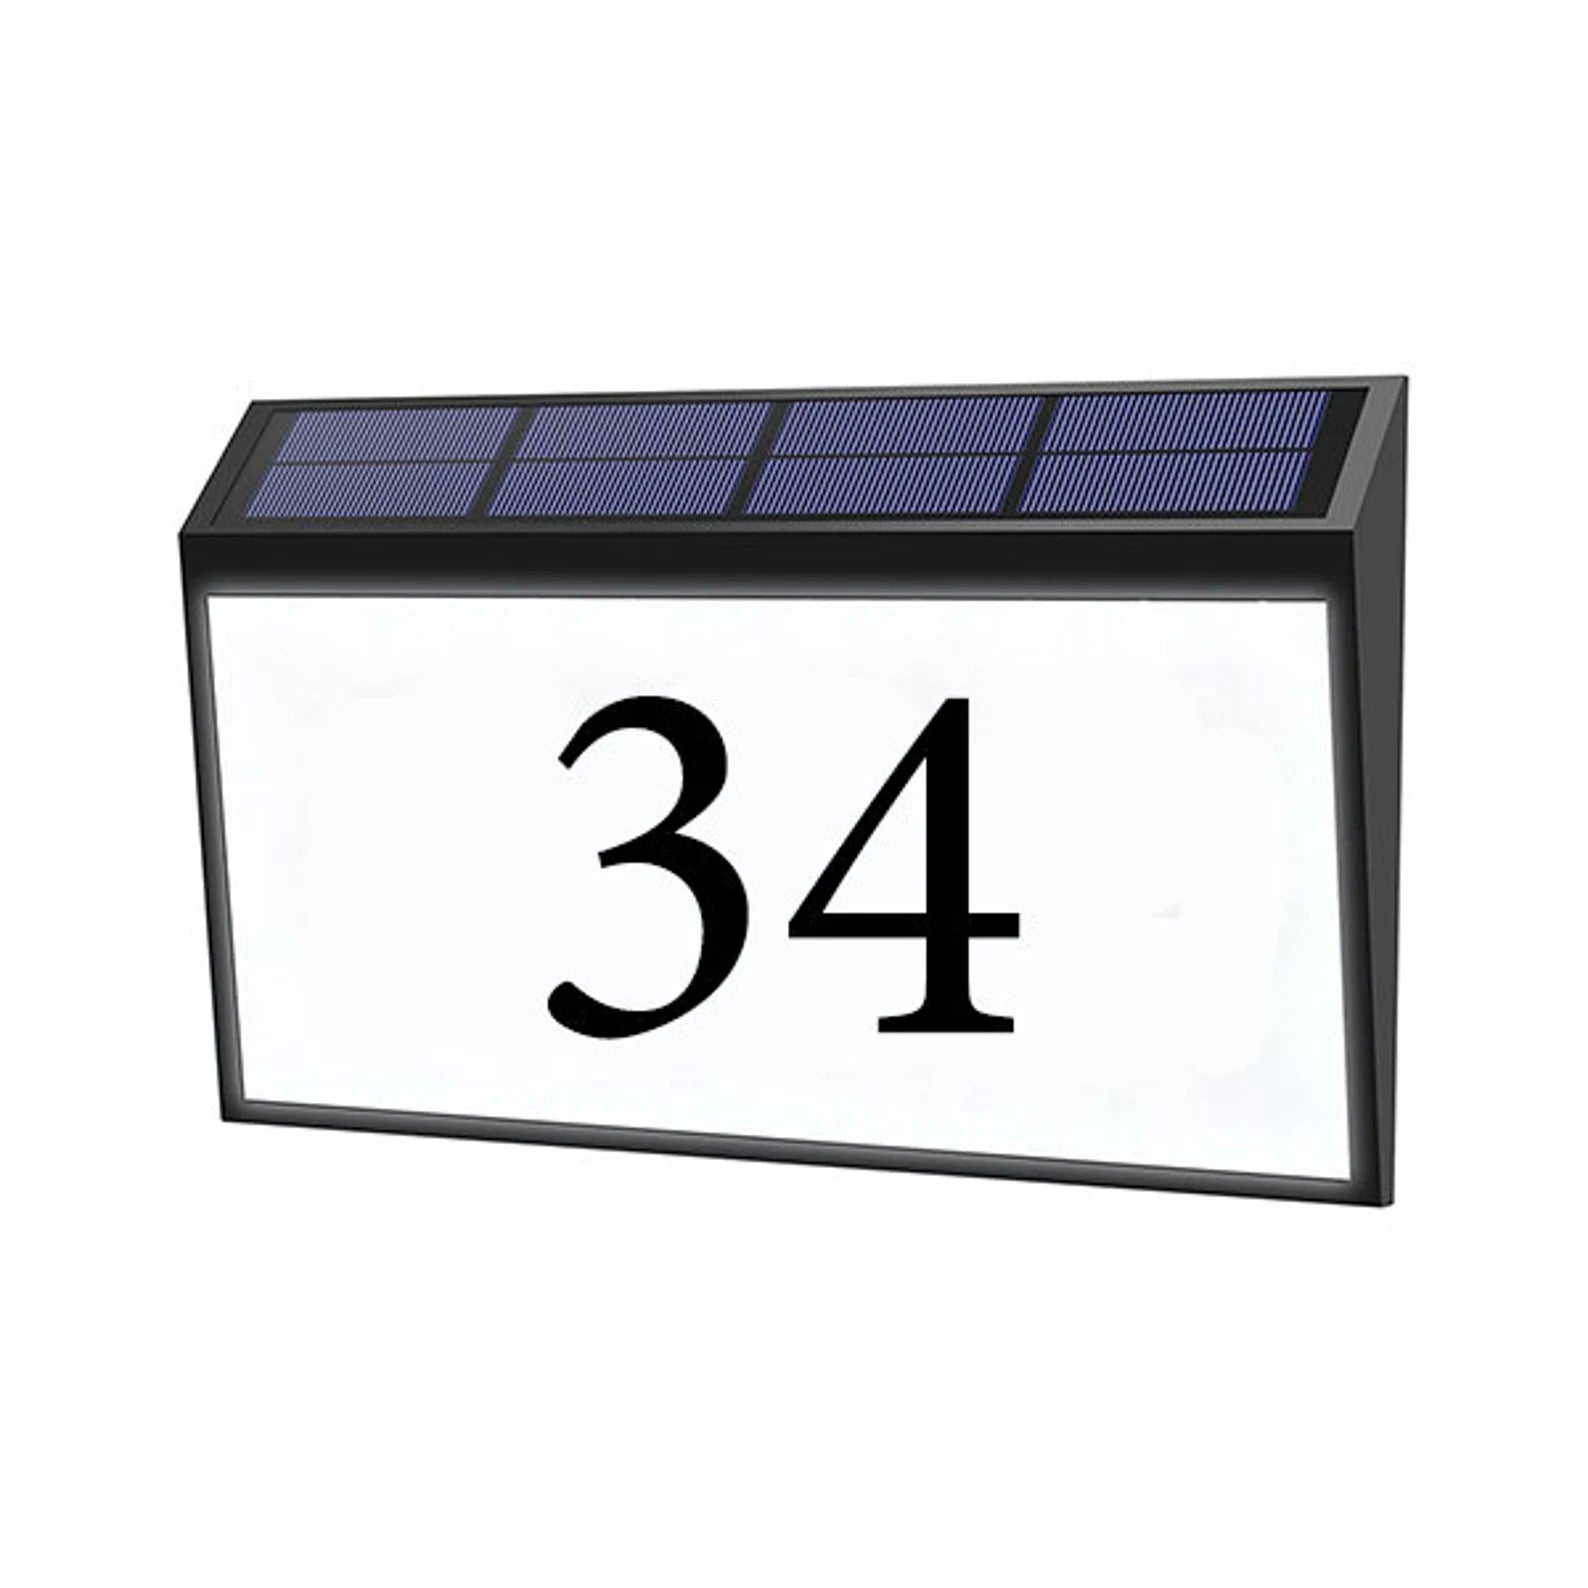 Beleuchtete Solar Hausnummer Personalisiert Hausnummernleuchte Hausnummernschild mit 10 LEDs